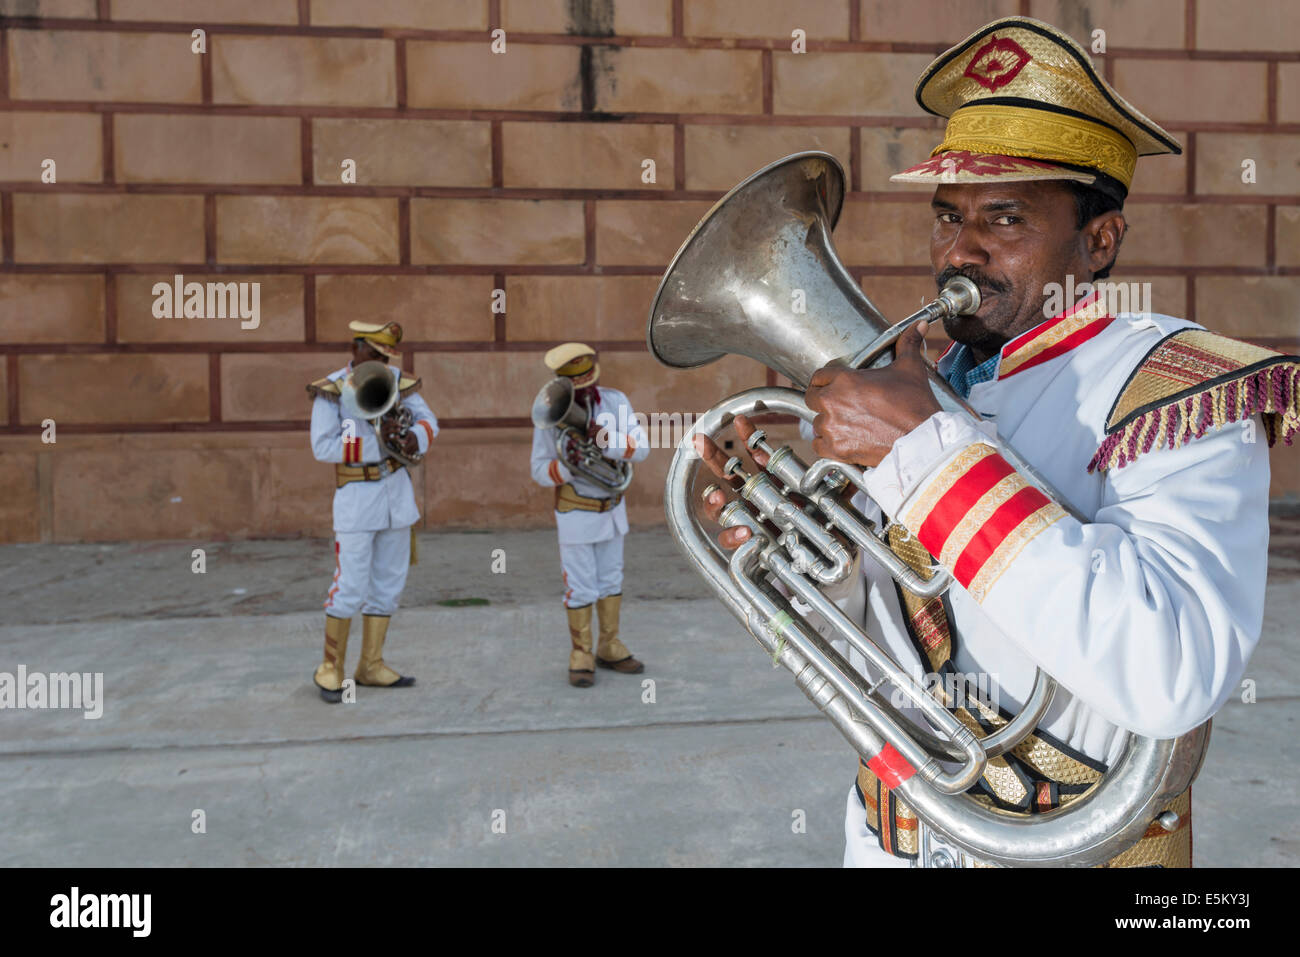 Musicians of a brass band wearing uniforms, Vrindavan, Uttar Pradesh, India Stock Photo